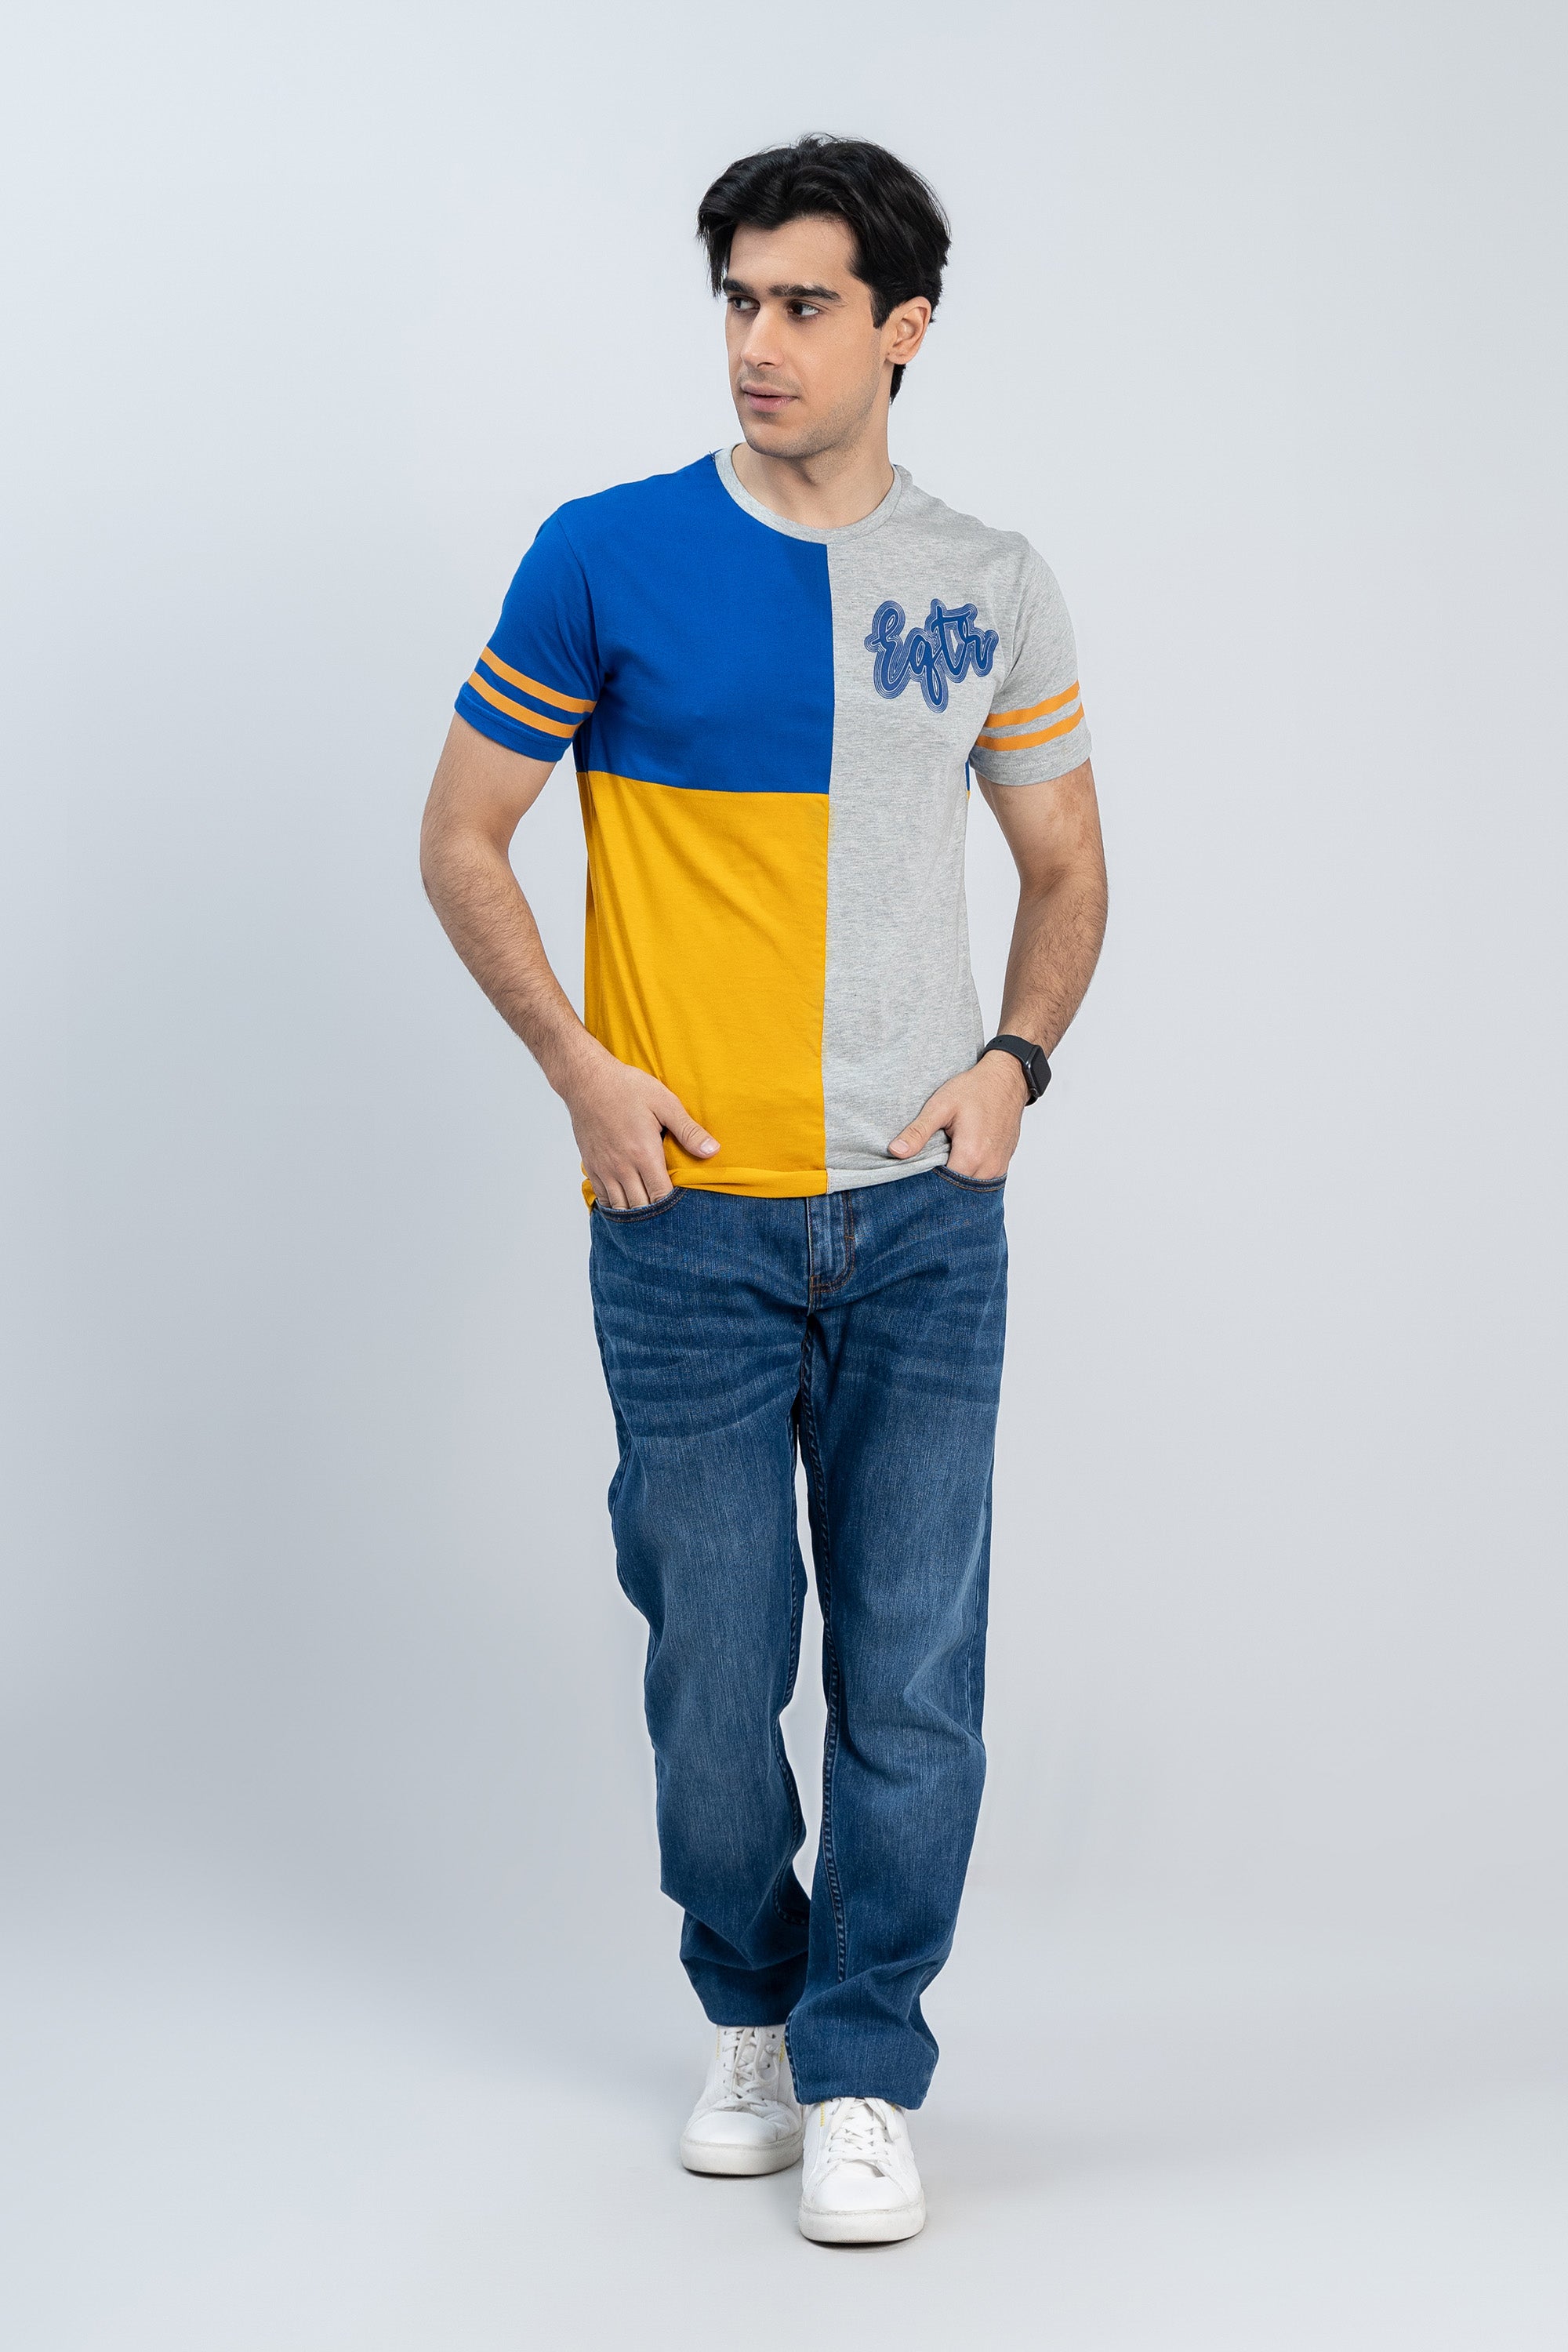 Grey-Blue-Yellow T-Shirt